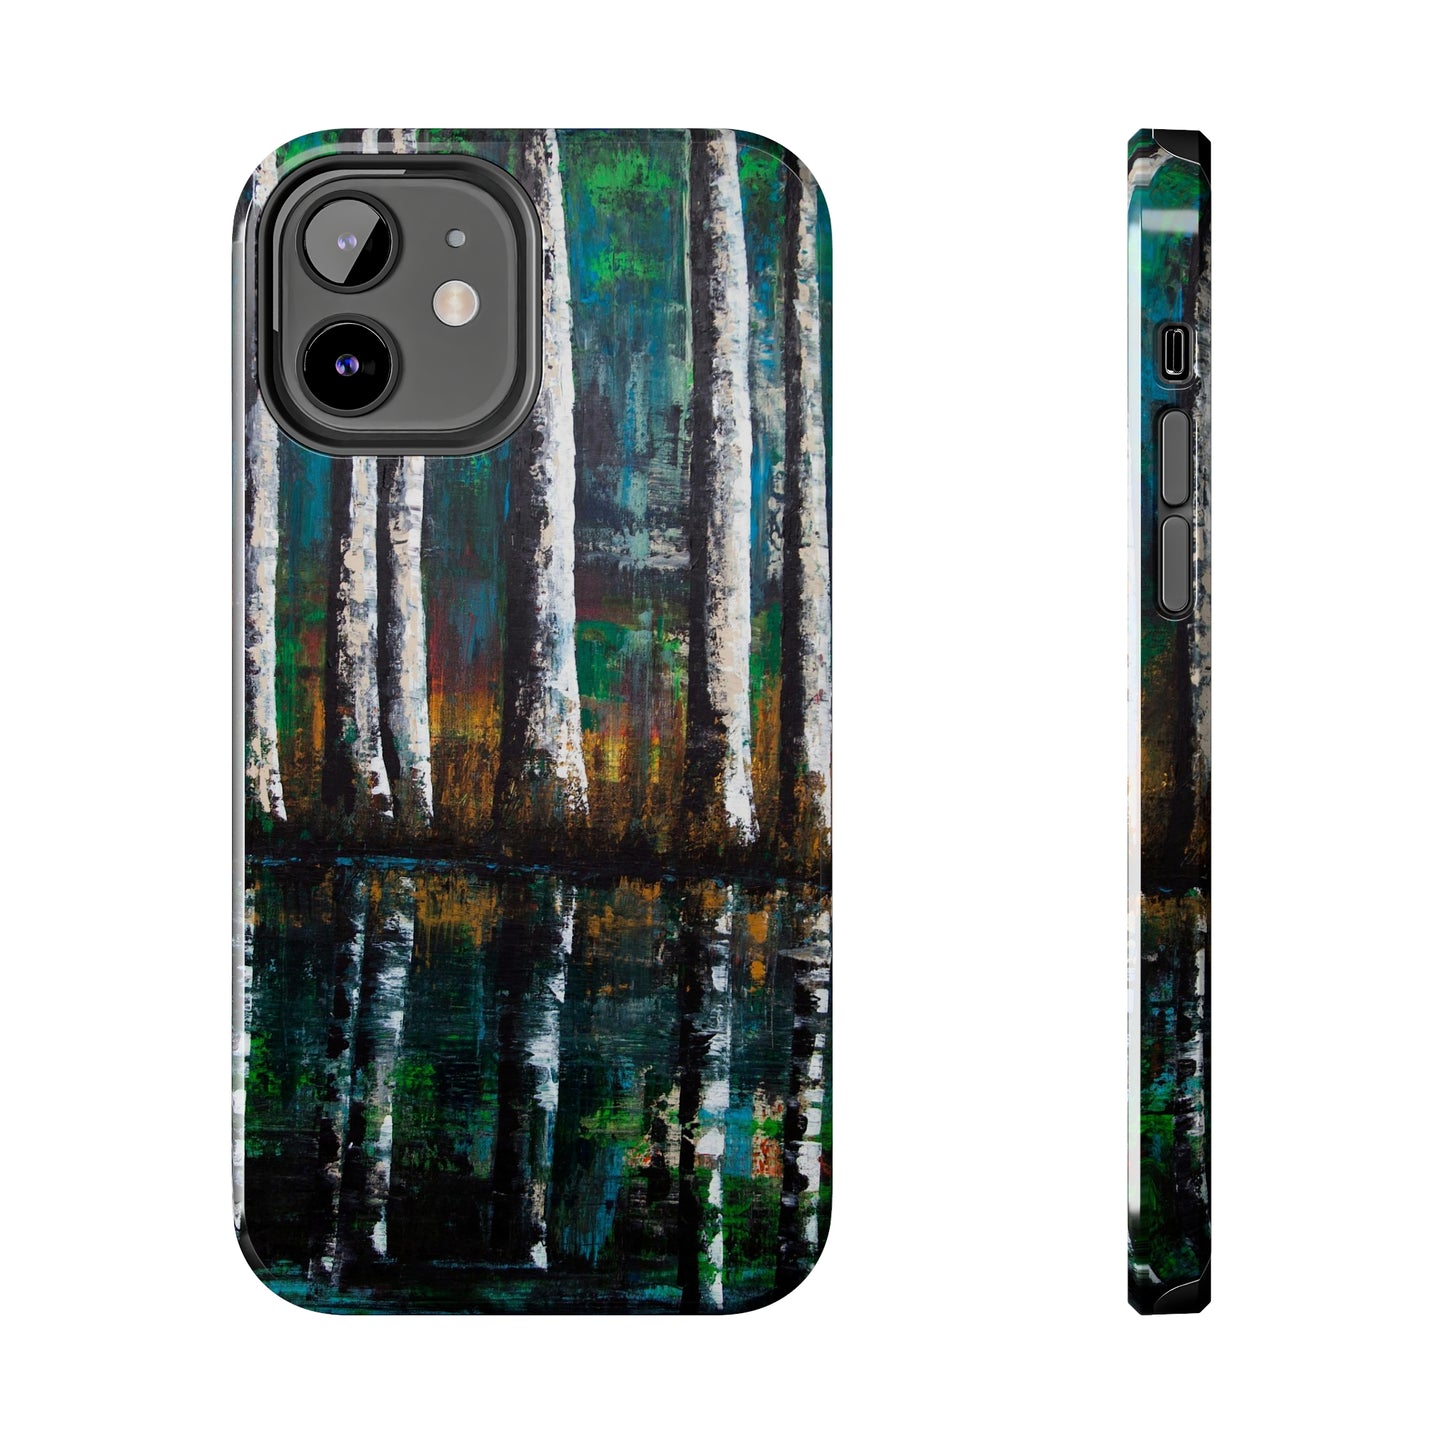 Tough Phone Case - Original art phone case - Slim phone Case - Reflections